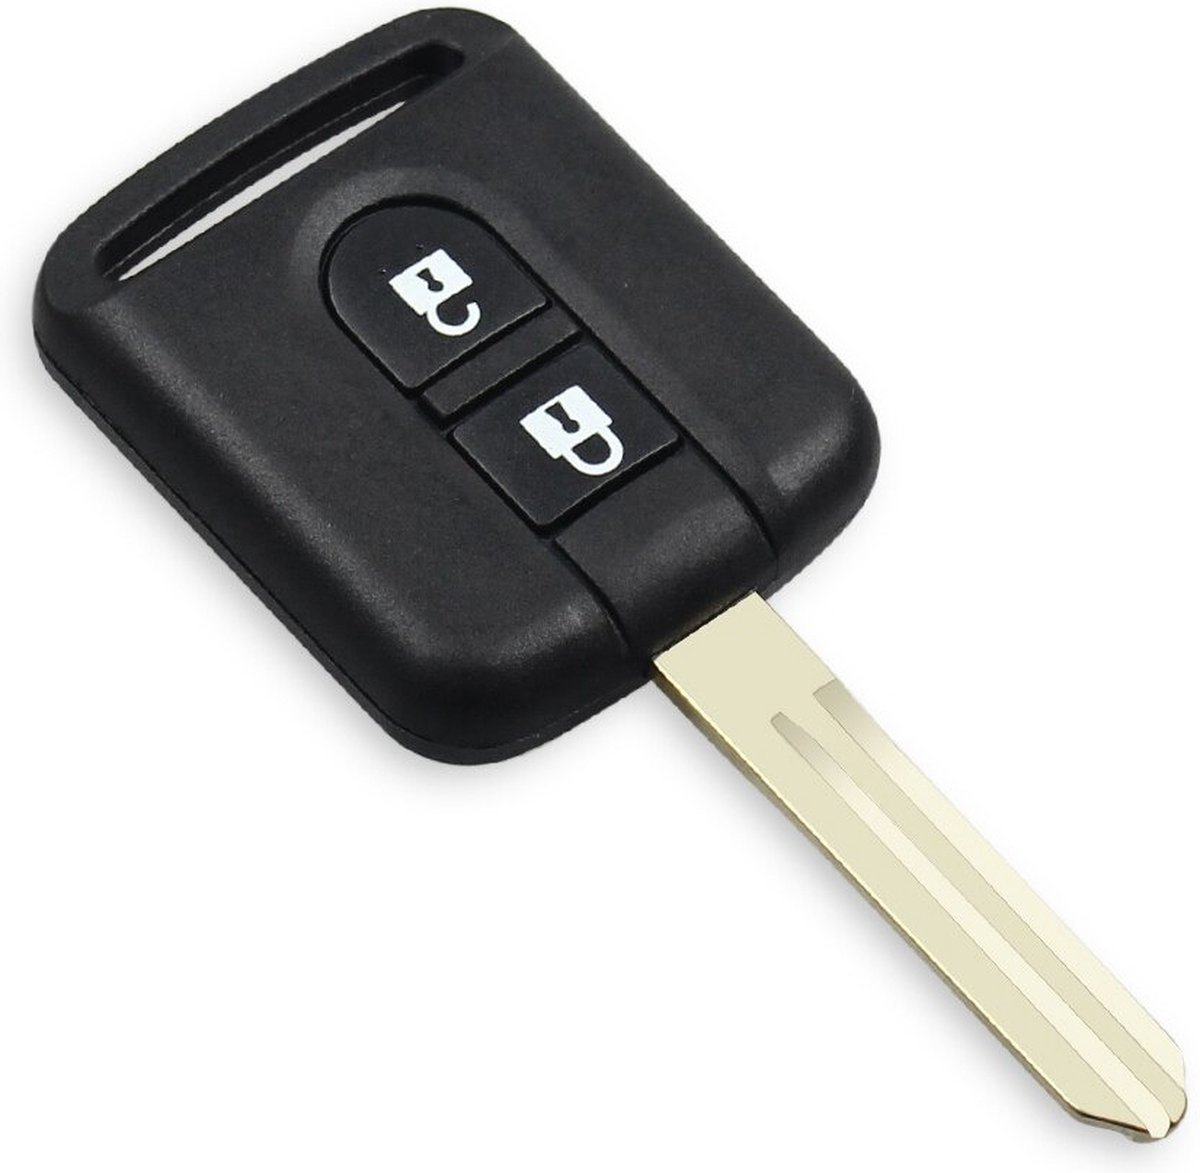 Autosleutelbehuizing - sleutelbehuizing auto - sleutel - Autosleutel geschikt voor: Nissan 2 knops